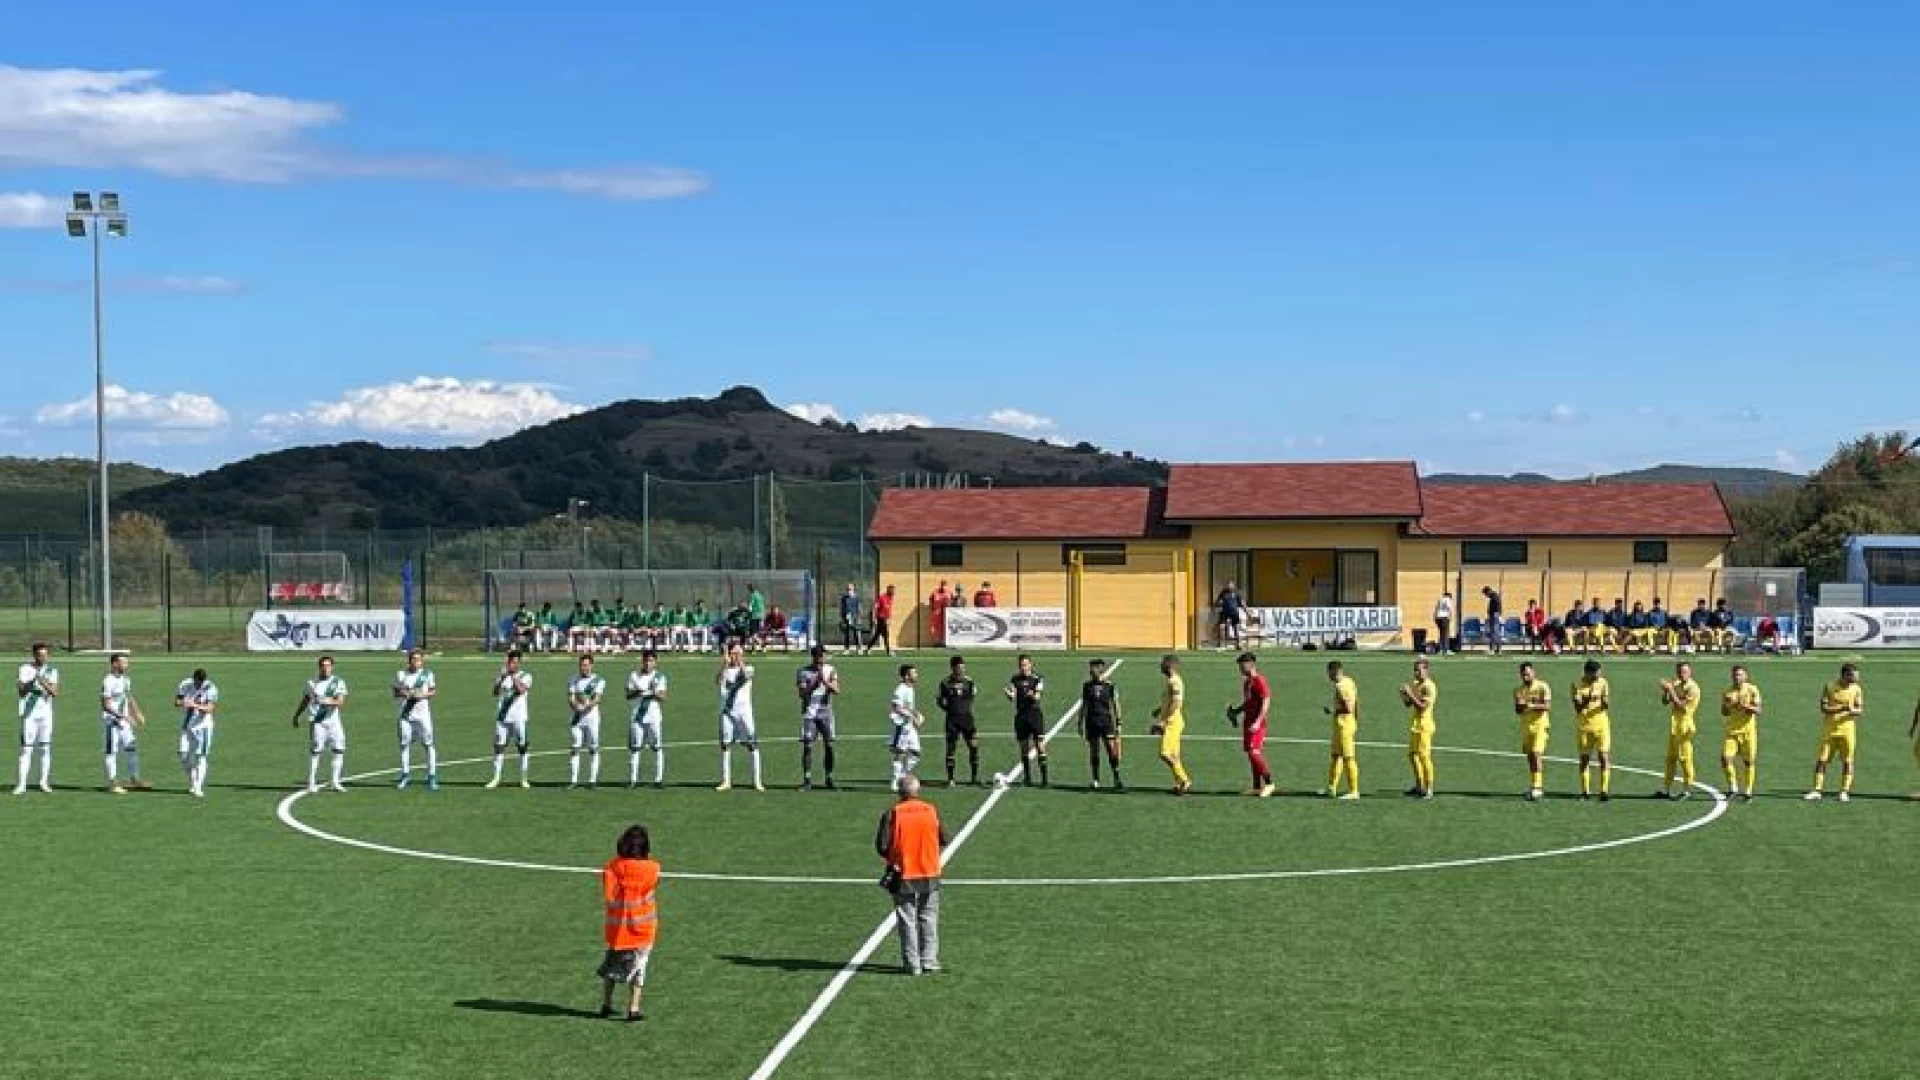 Castelfidardo-Vastogirardi 0-0, tabellino e cronaca del match.